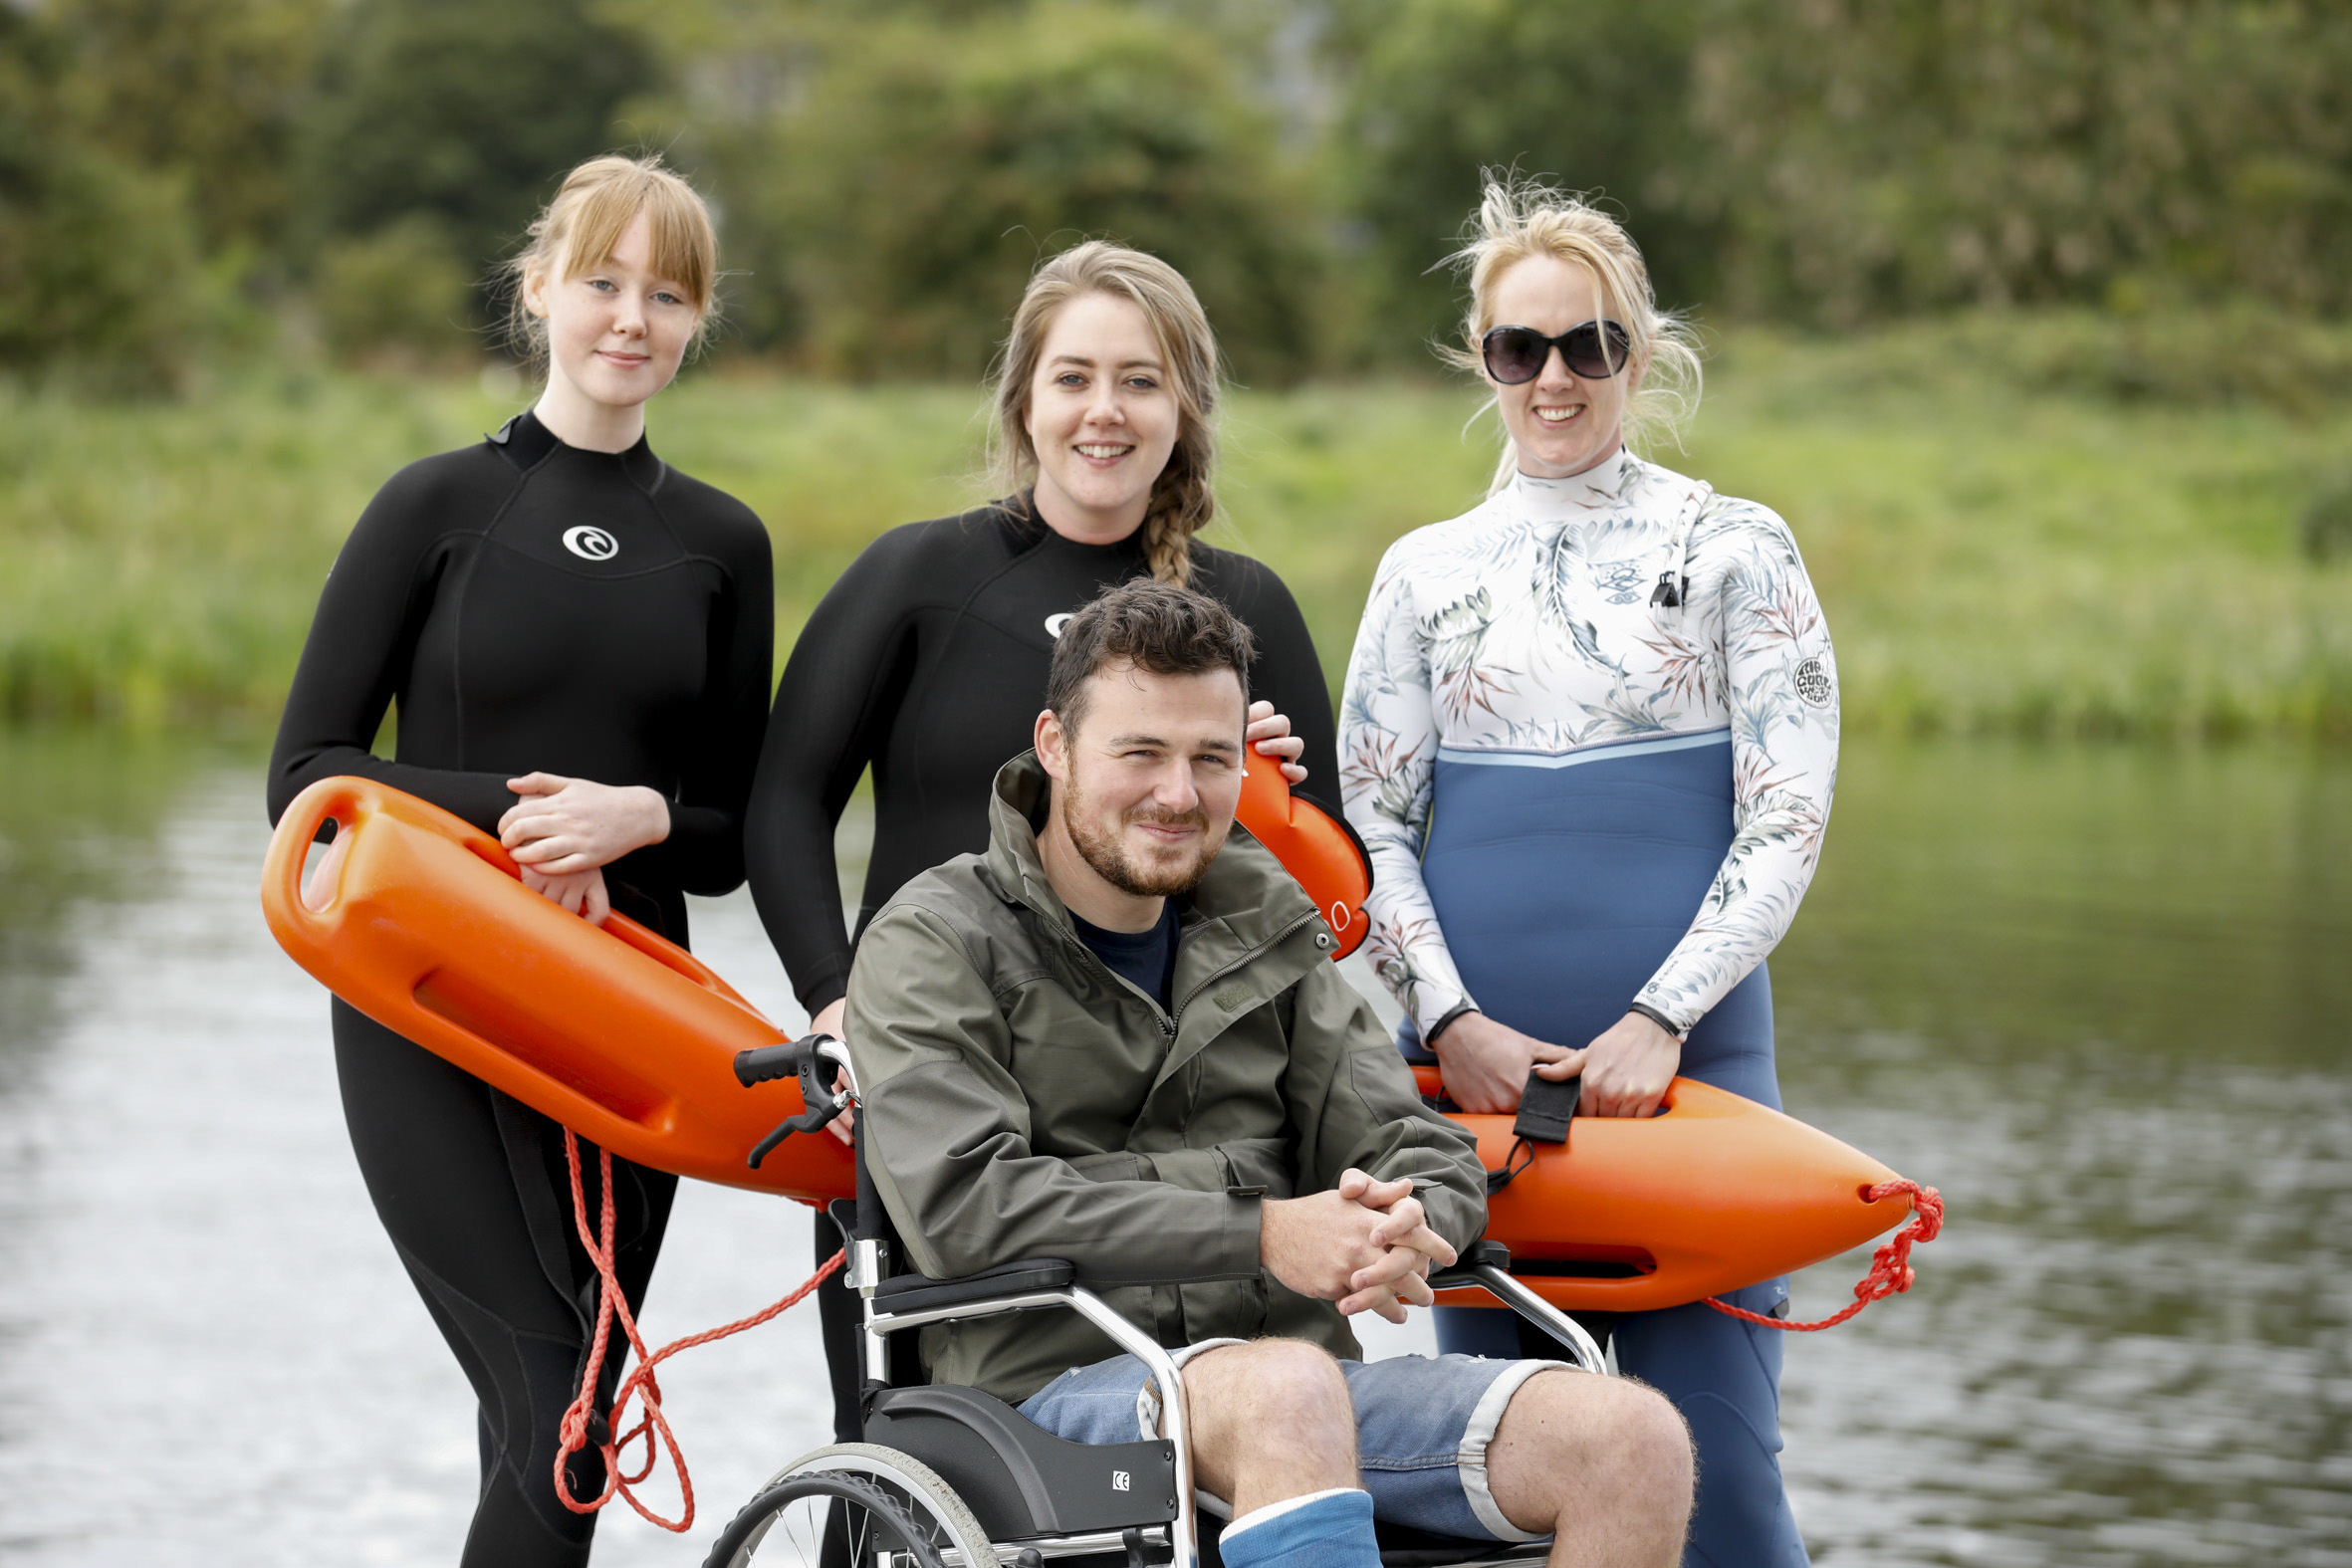 Festival Lough Erne kicks off with a splash at charity swim around island